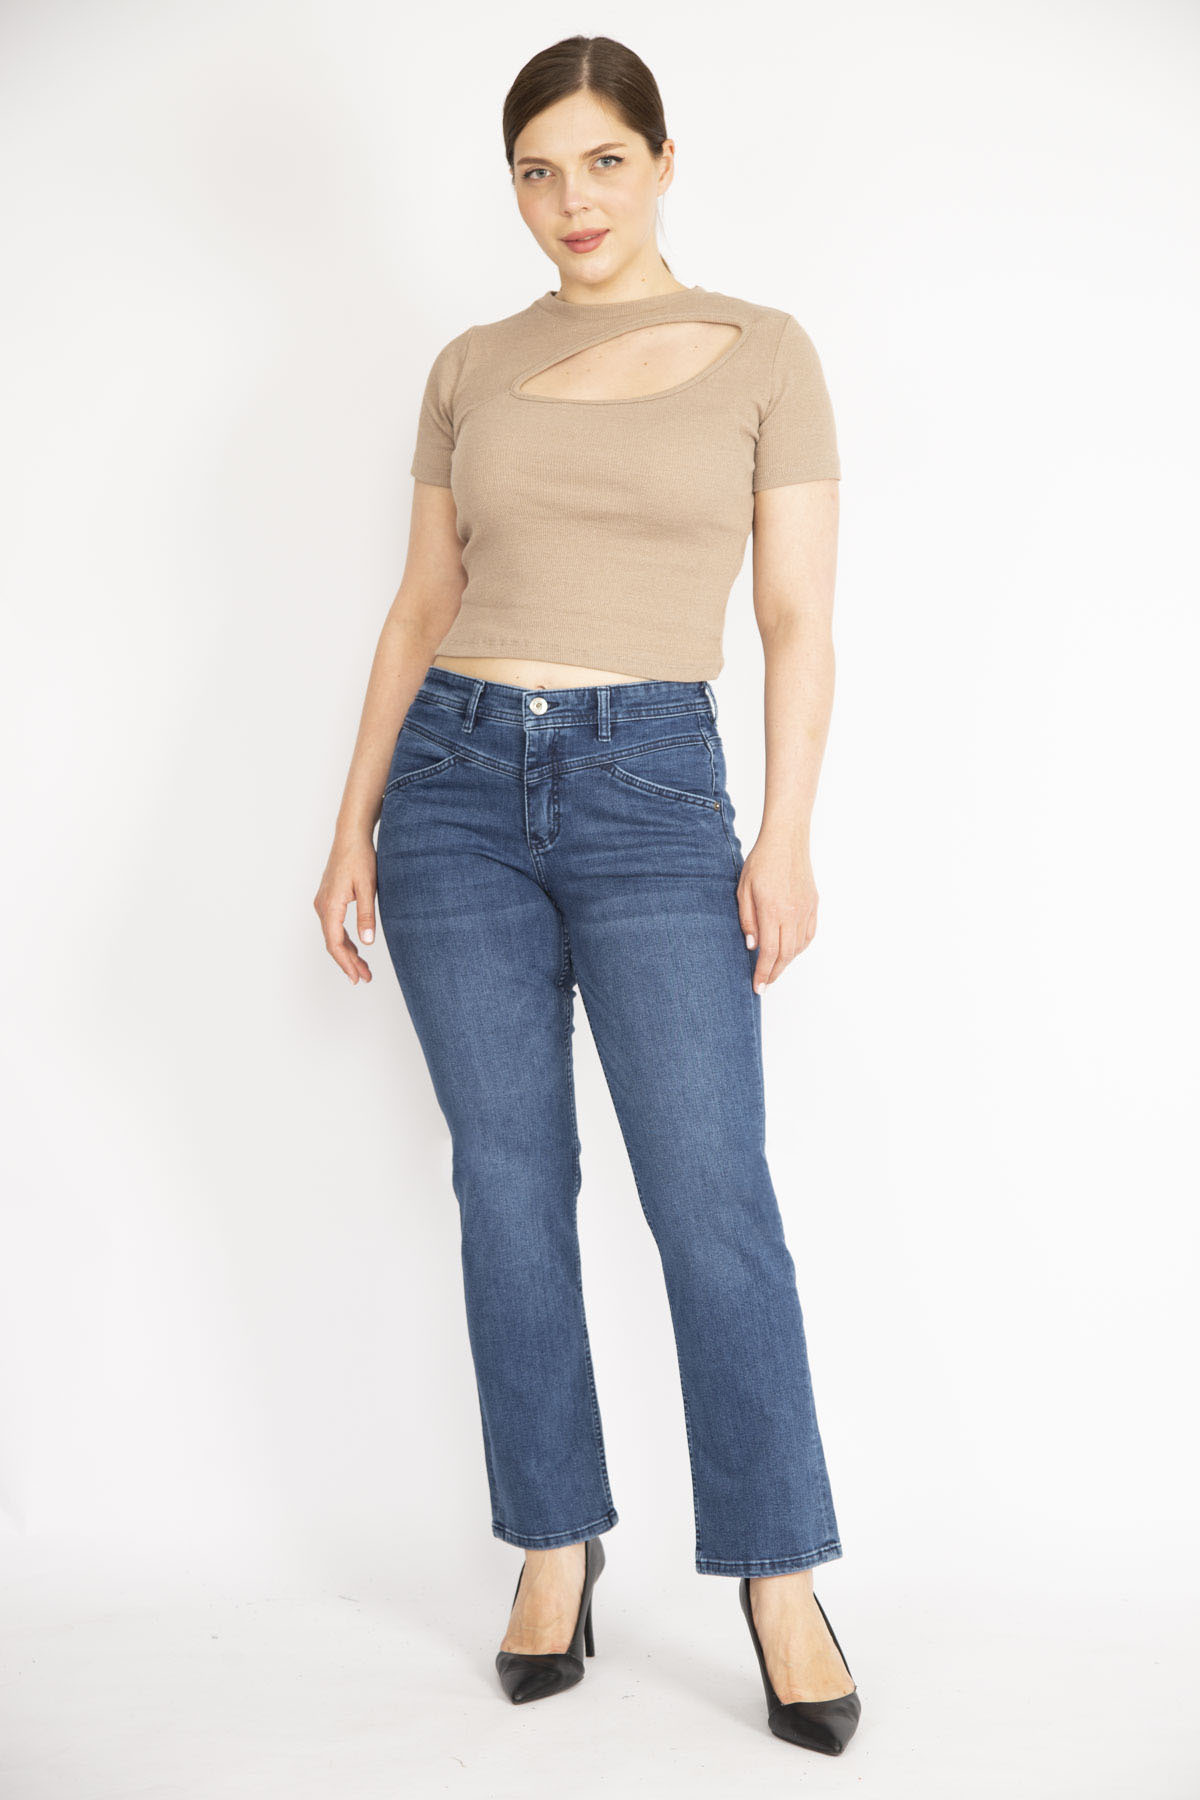 Şans Women's Plus Size Navy Blue Belt Detail 5 Pocket Lycra Jeans